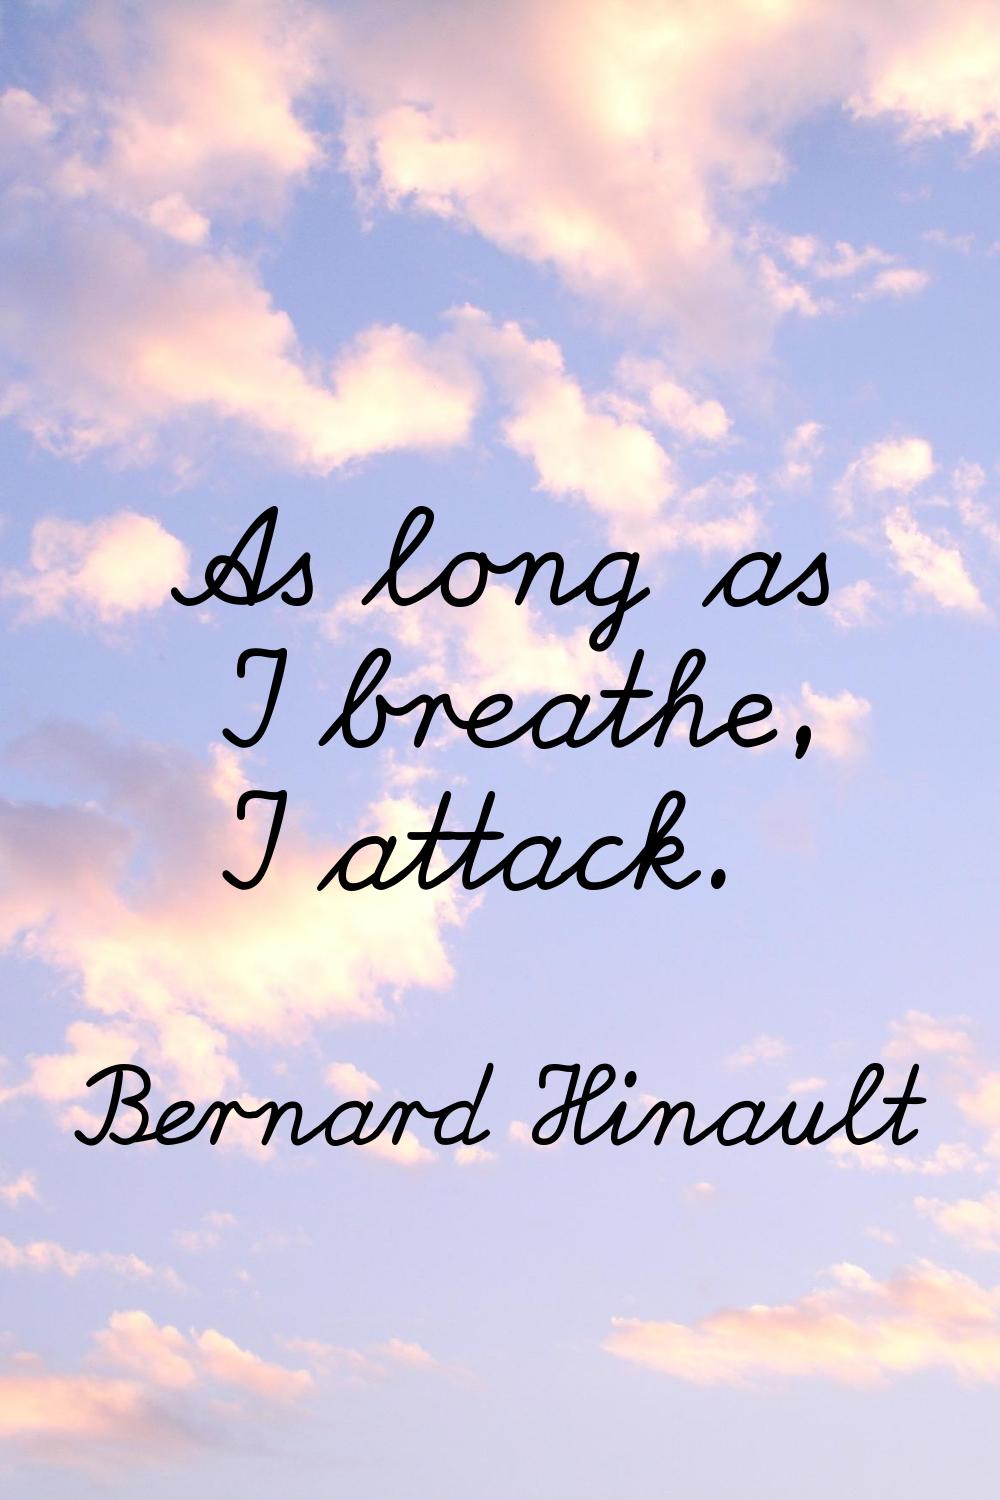 As long as I breathe, I attack.